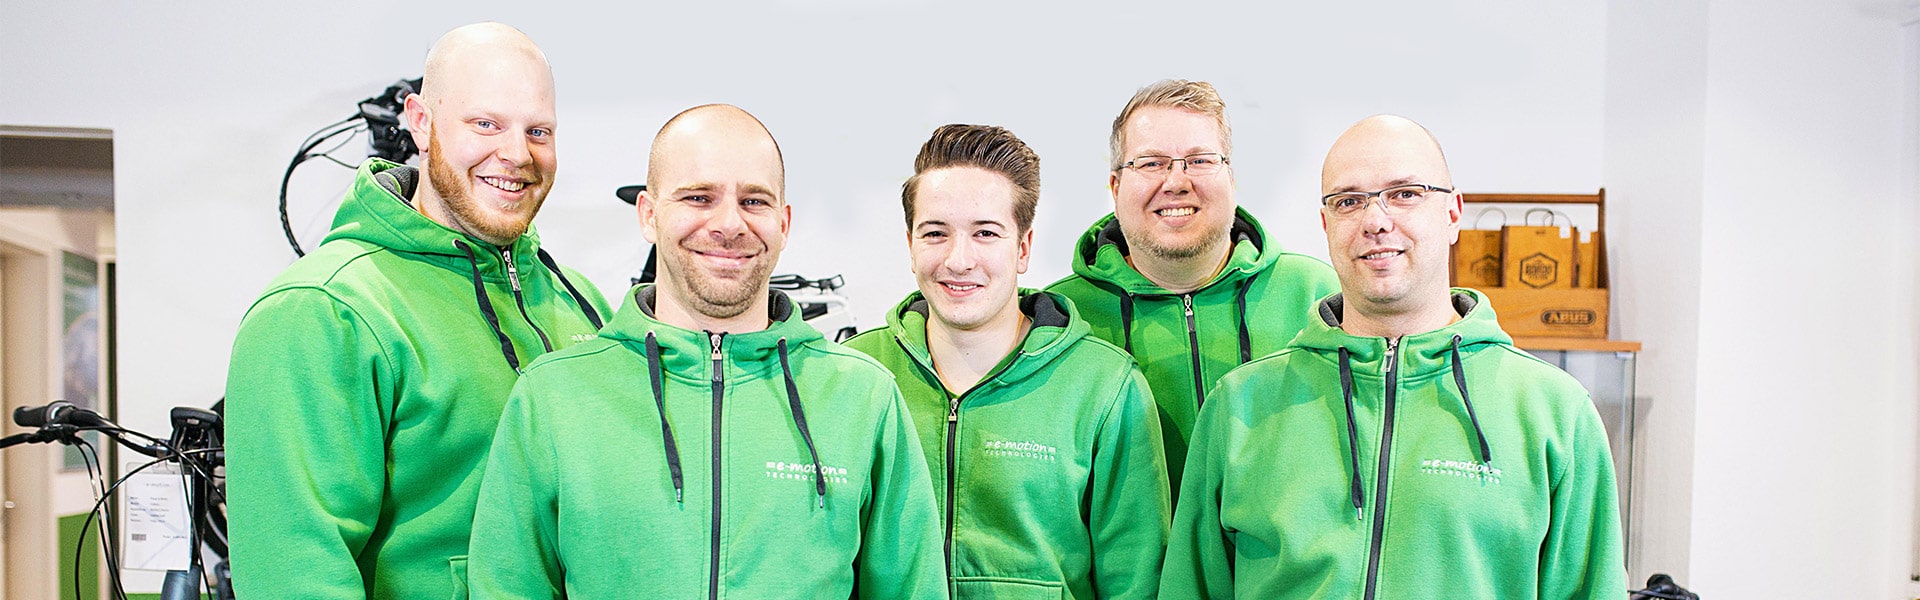 Das Team des e-motion e-Bike Premium-Shop Köln